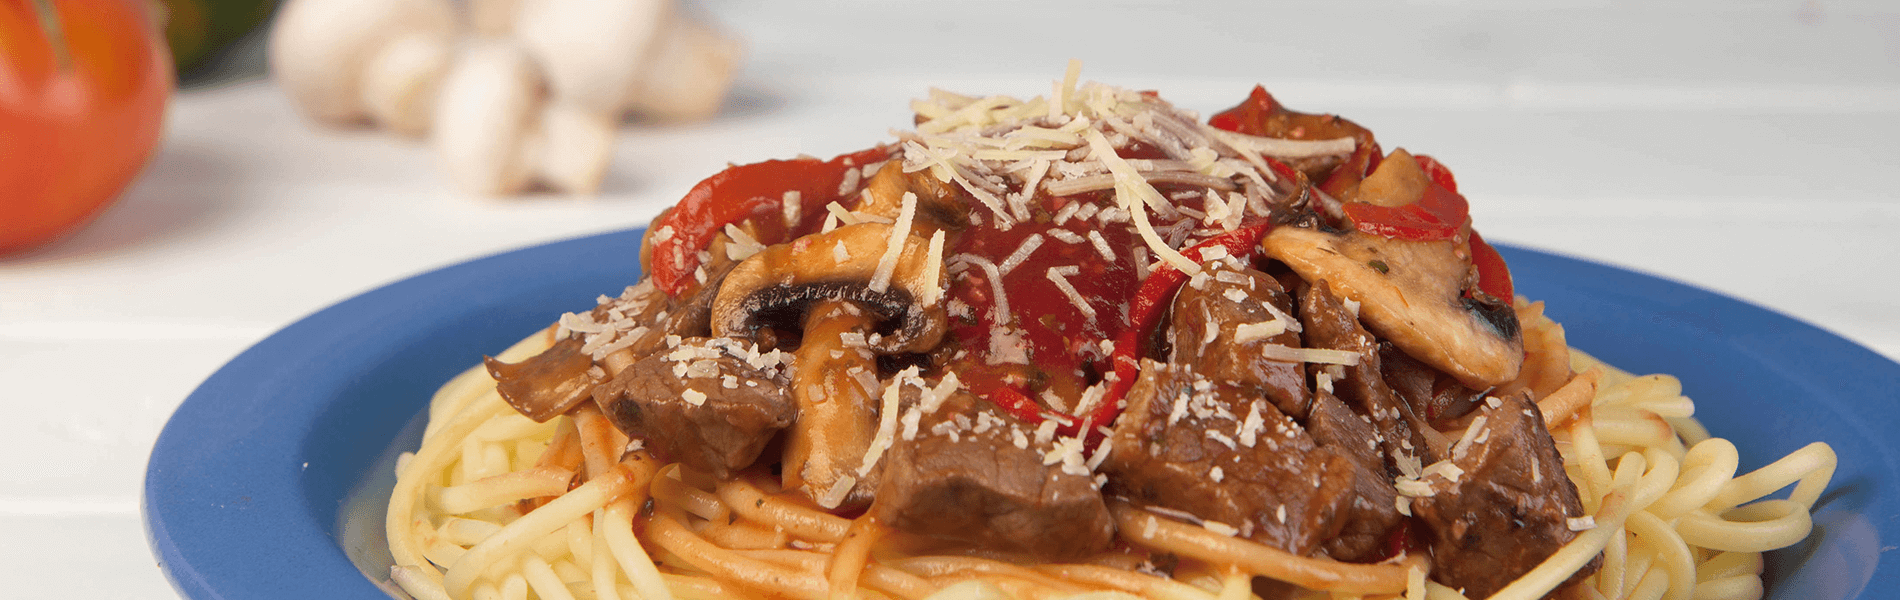 Spaghetti Doria con Carne y Salsa Lista de Tomate Doria Finas Hierbas.